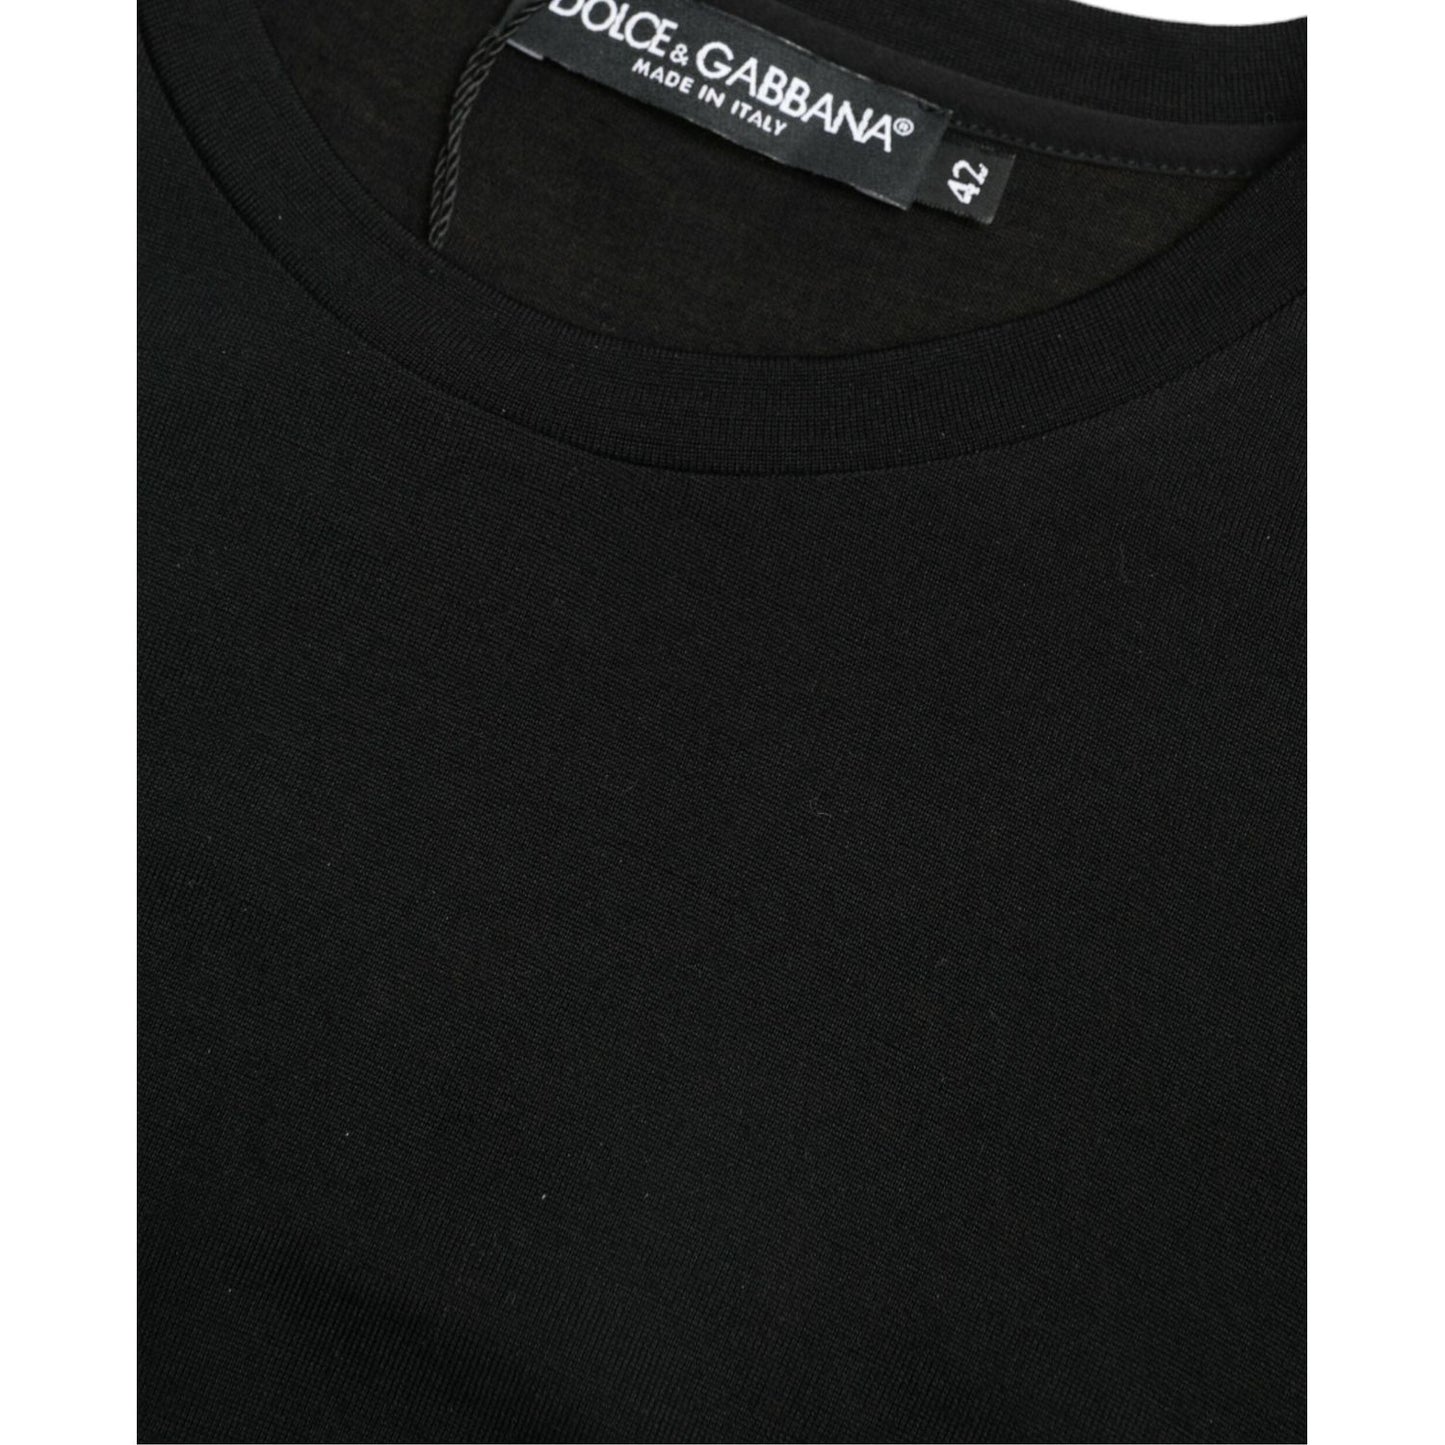 Dolce & Gabbana Elegant Wool Crew Neck Tee black-wool-short-sleeves-crewneck-top-t-shirt